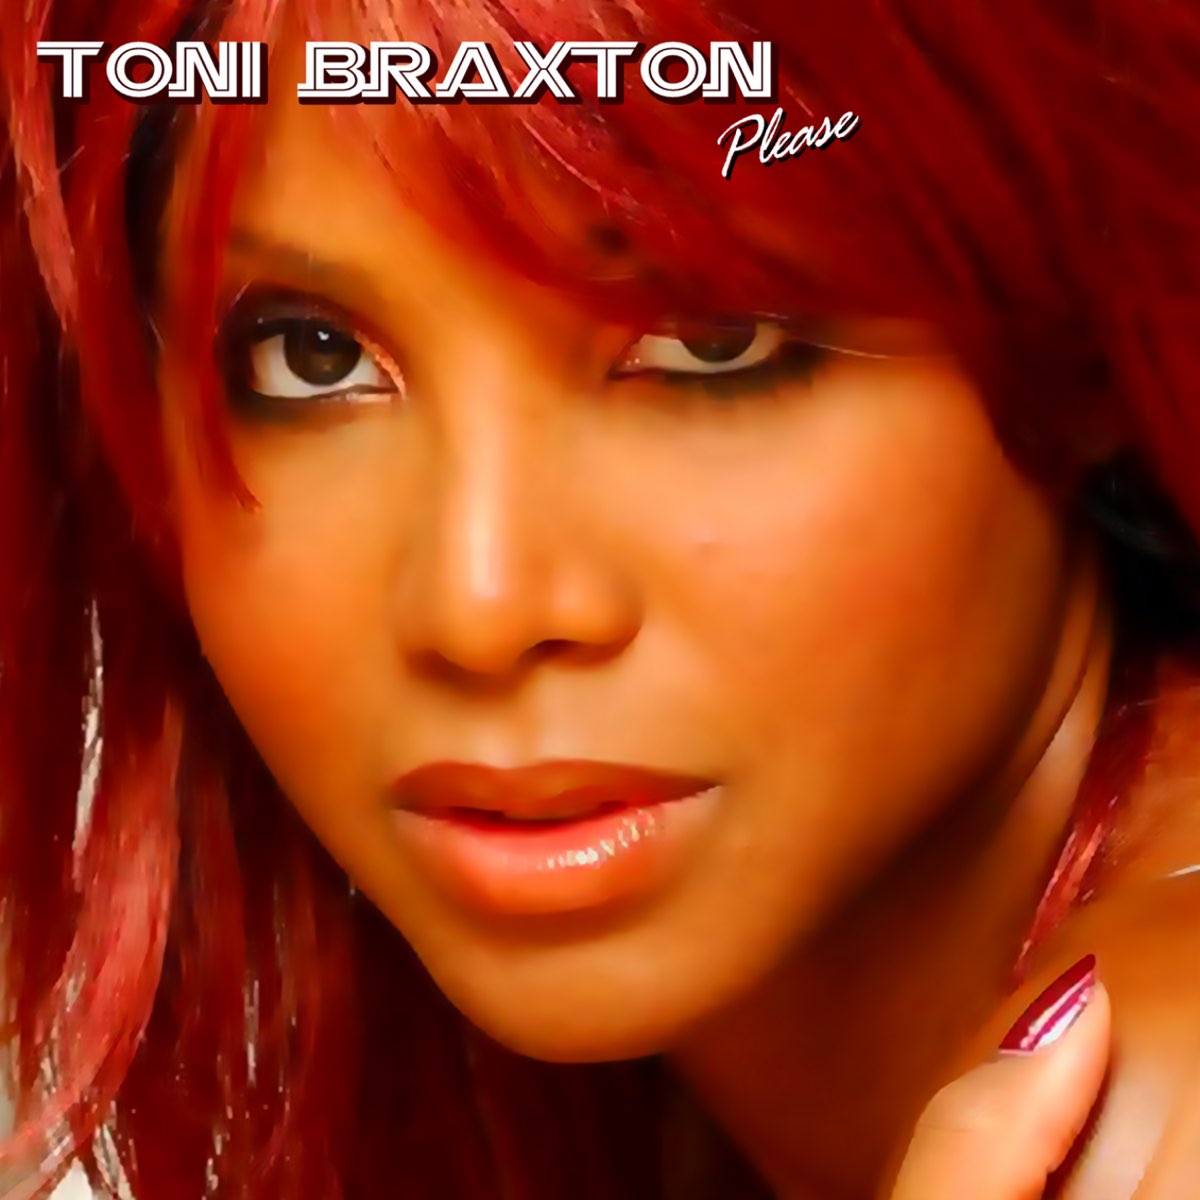 ‎Please - EP - Album by Toni Braxton - Apple Music